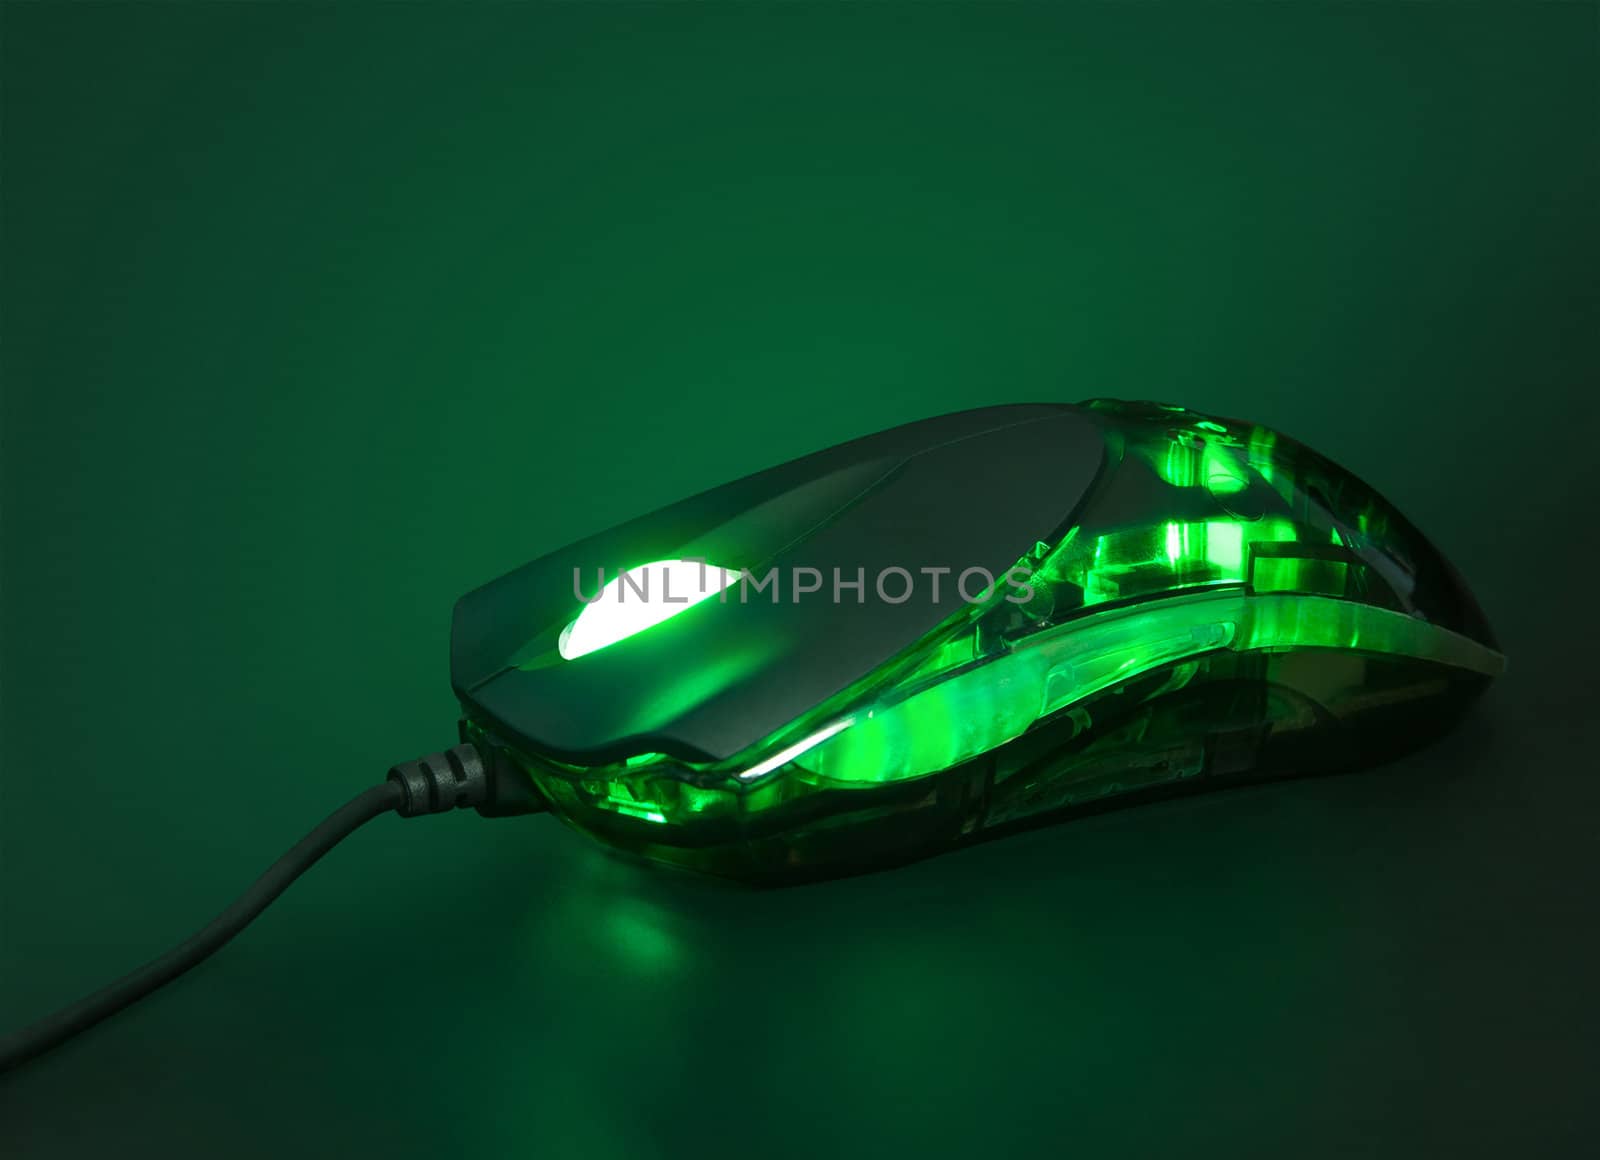 optical mouse